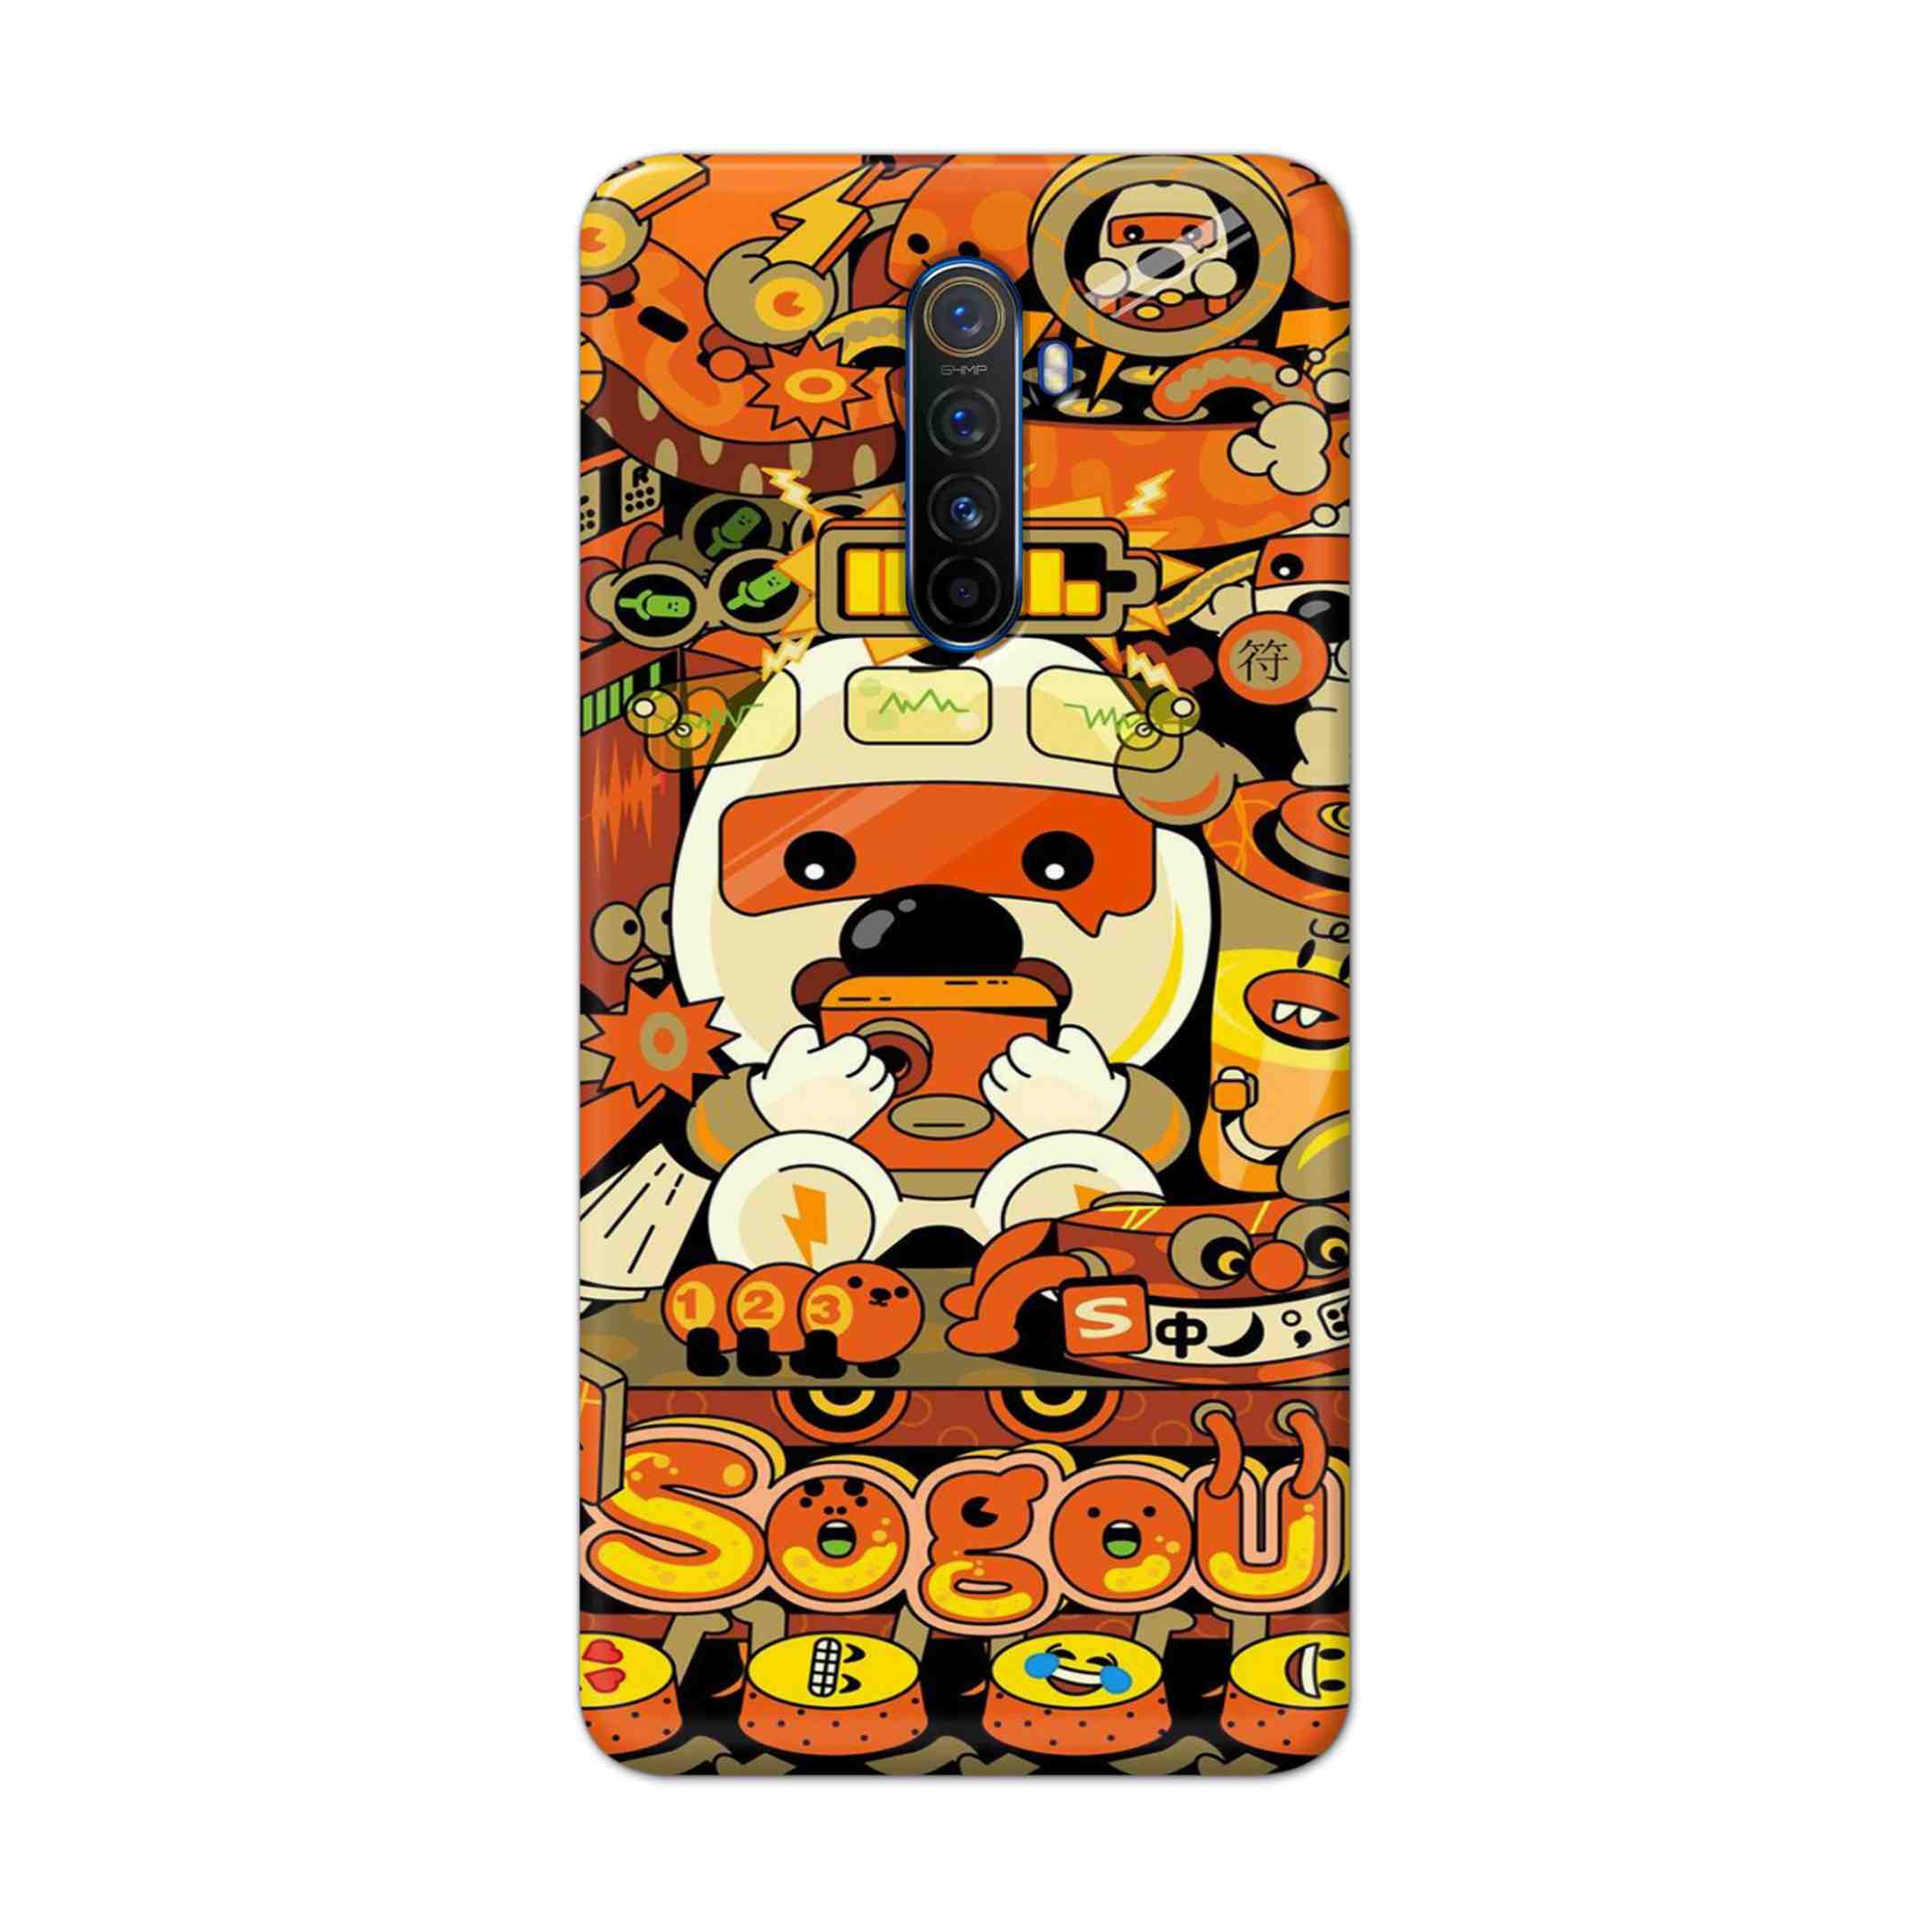 Buy Sogou Hard Back Mobile Phone Case Cover For Realme X2 Pro Online